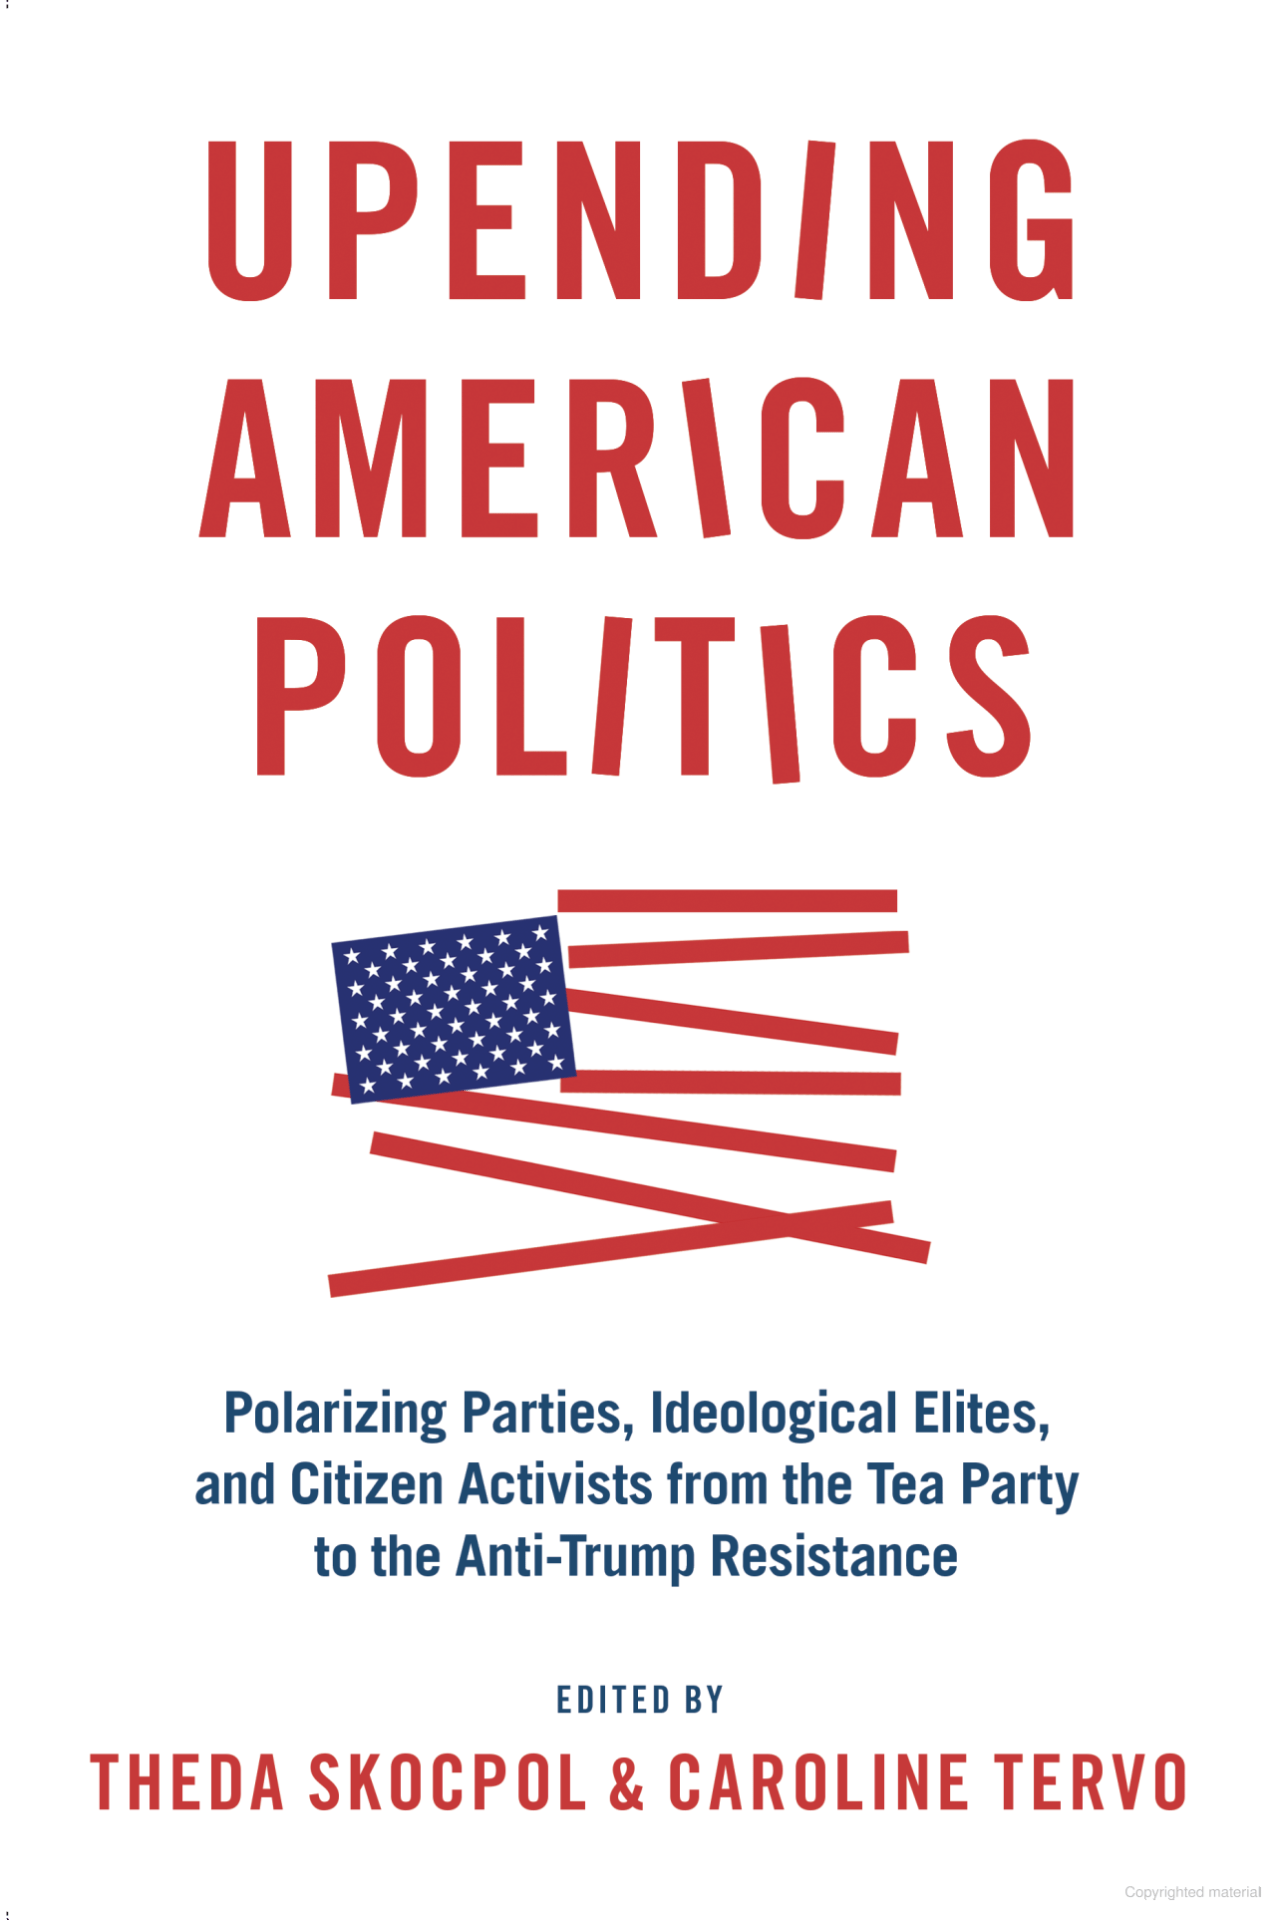 "Upending American Politics" Book Cover